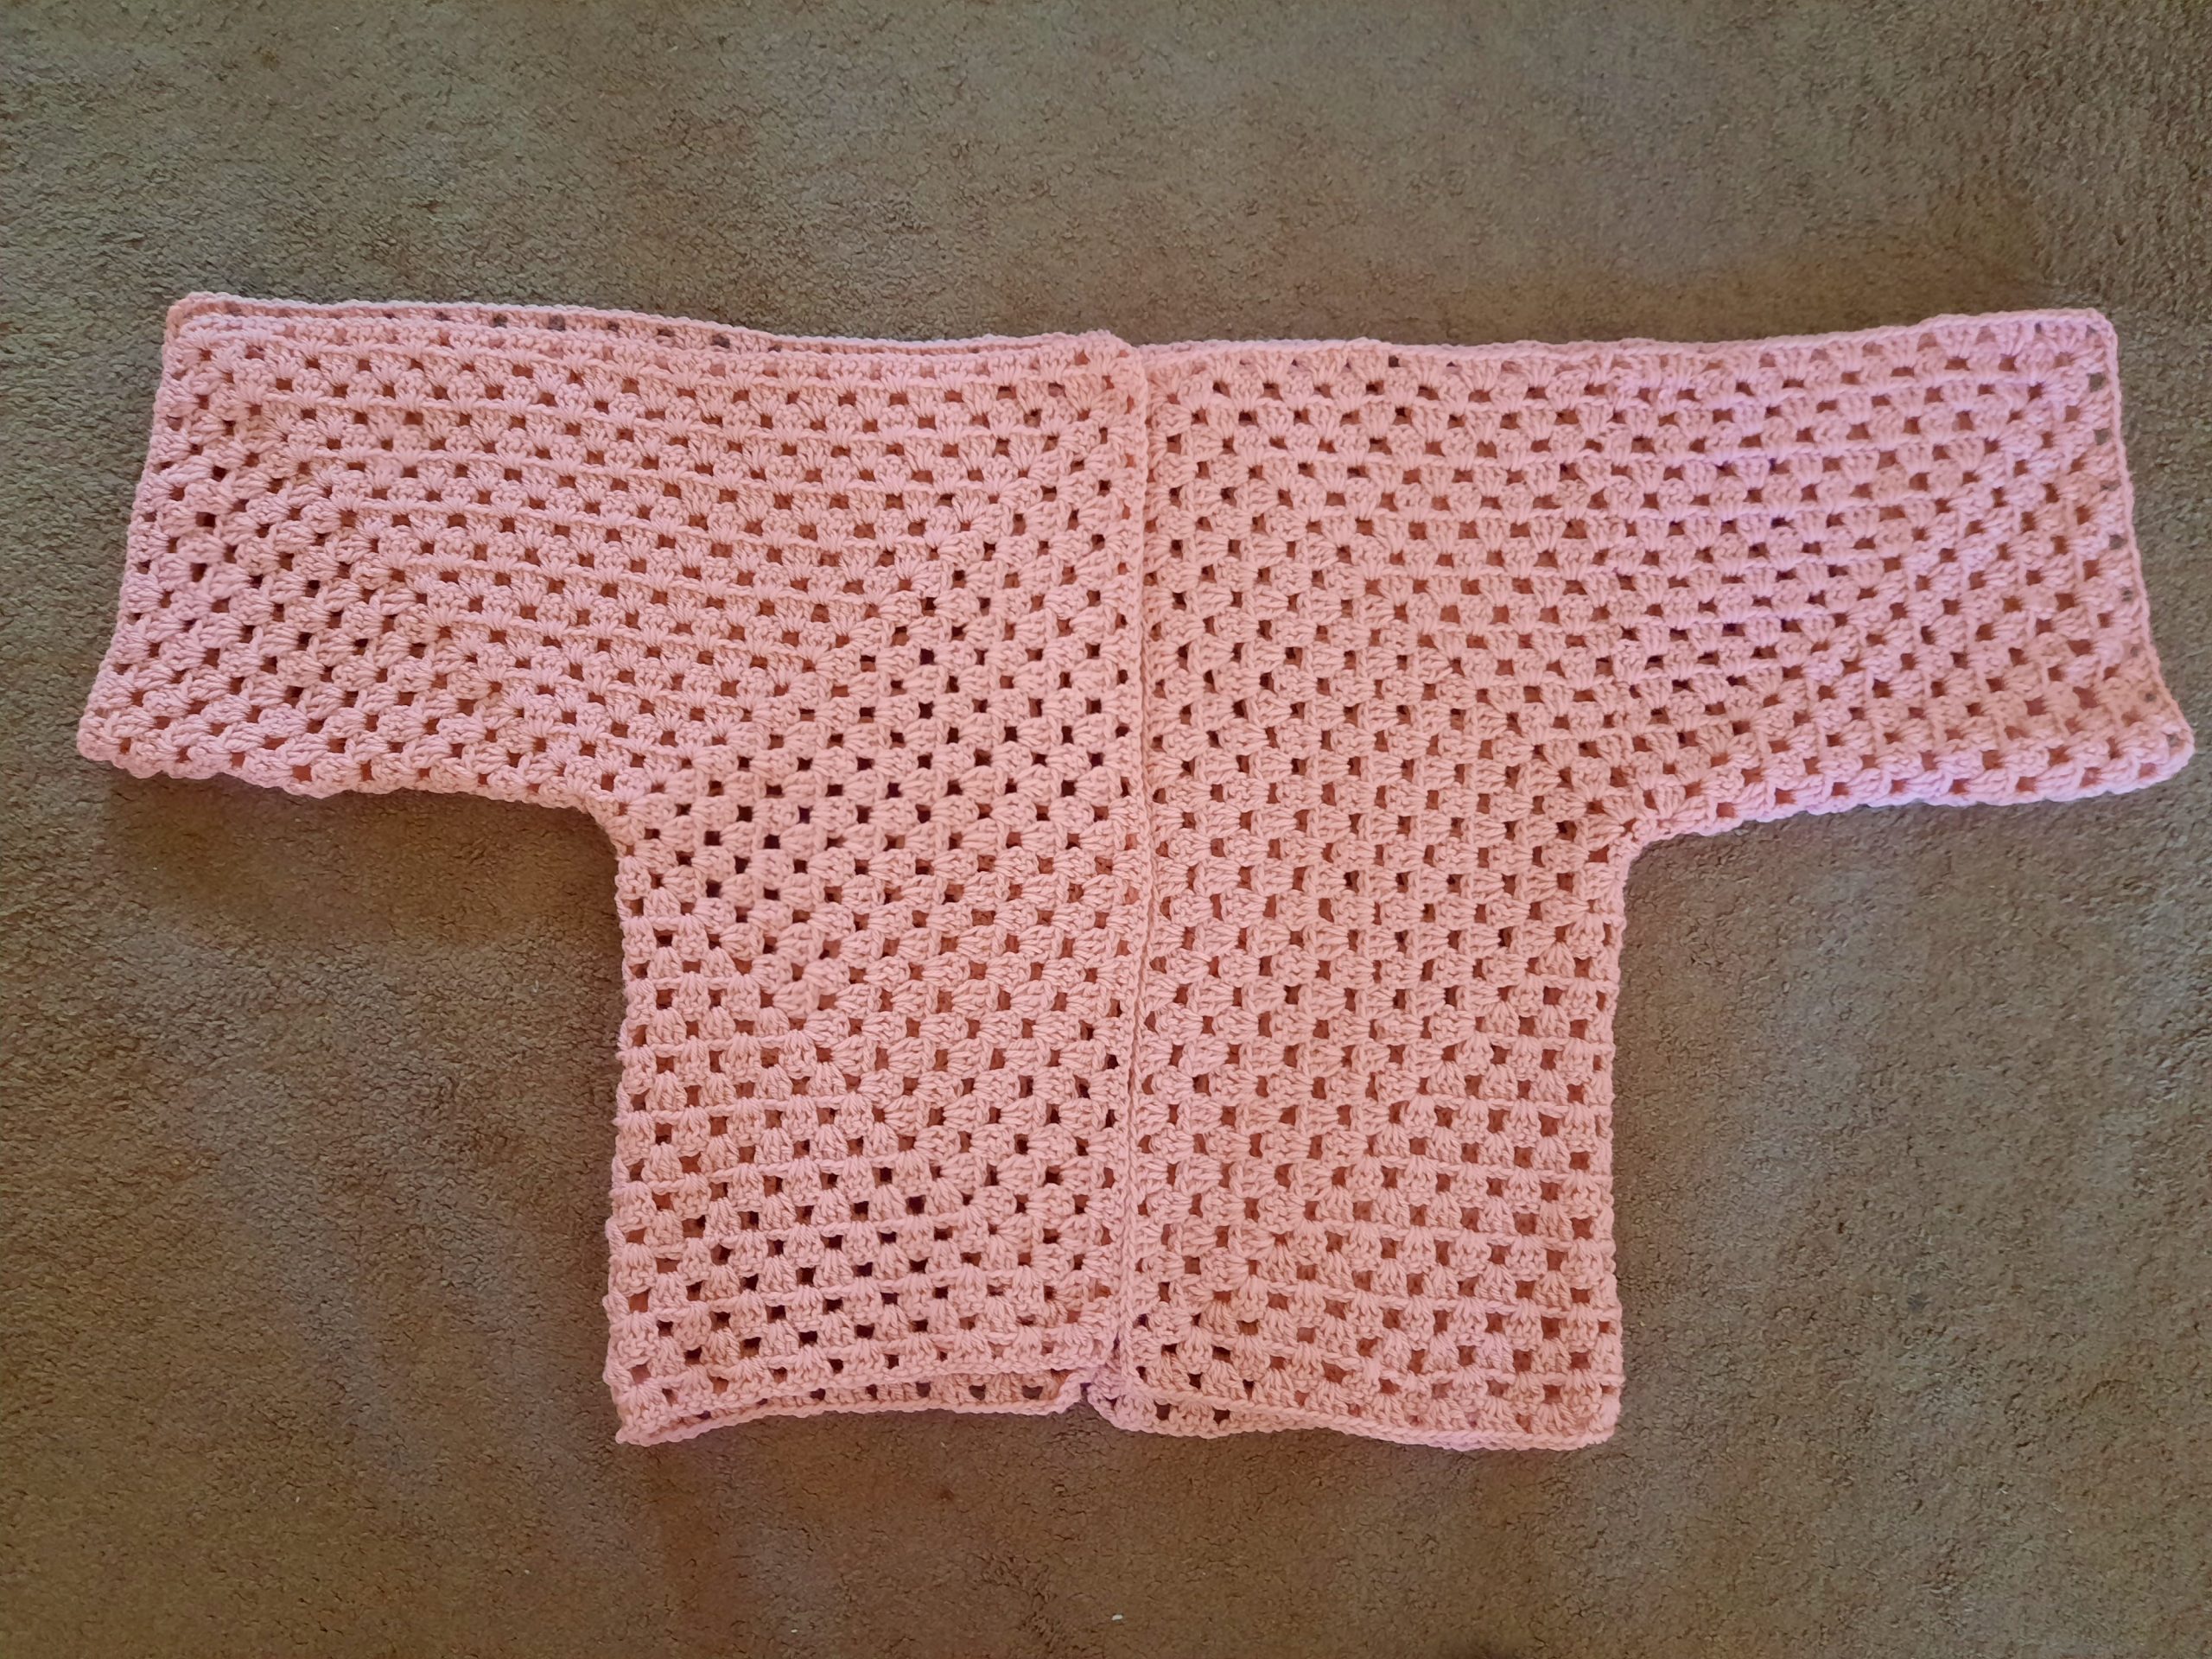 Crochet cardigan project